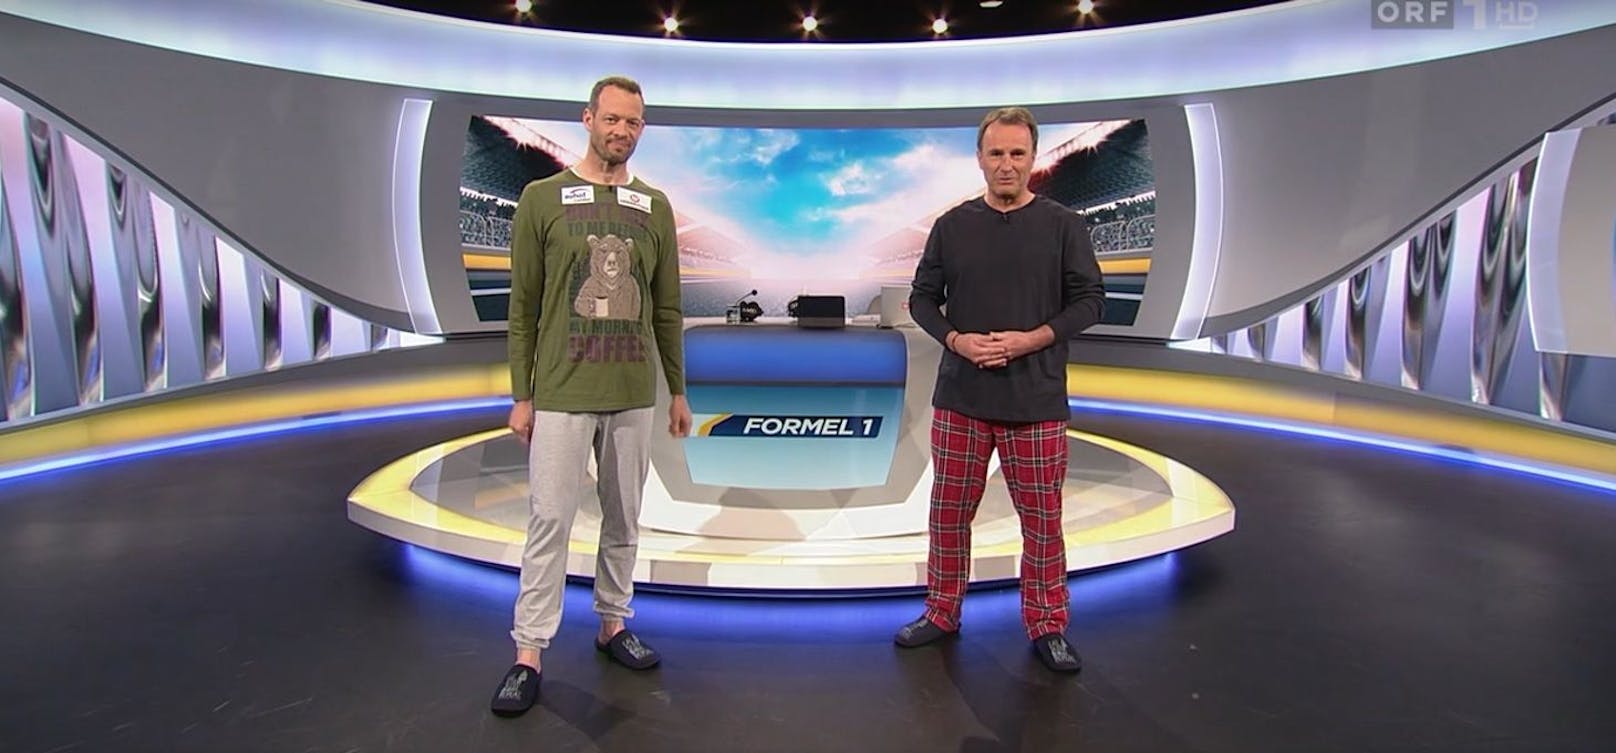 ORF-Kultduo kommentiert die Formel 1 im Pyjama